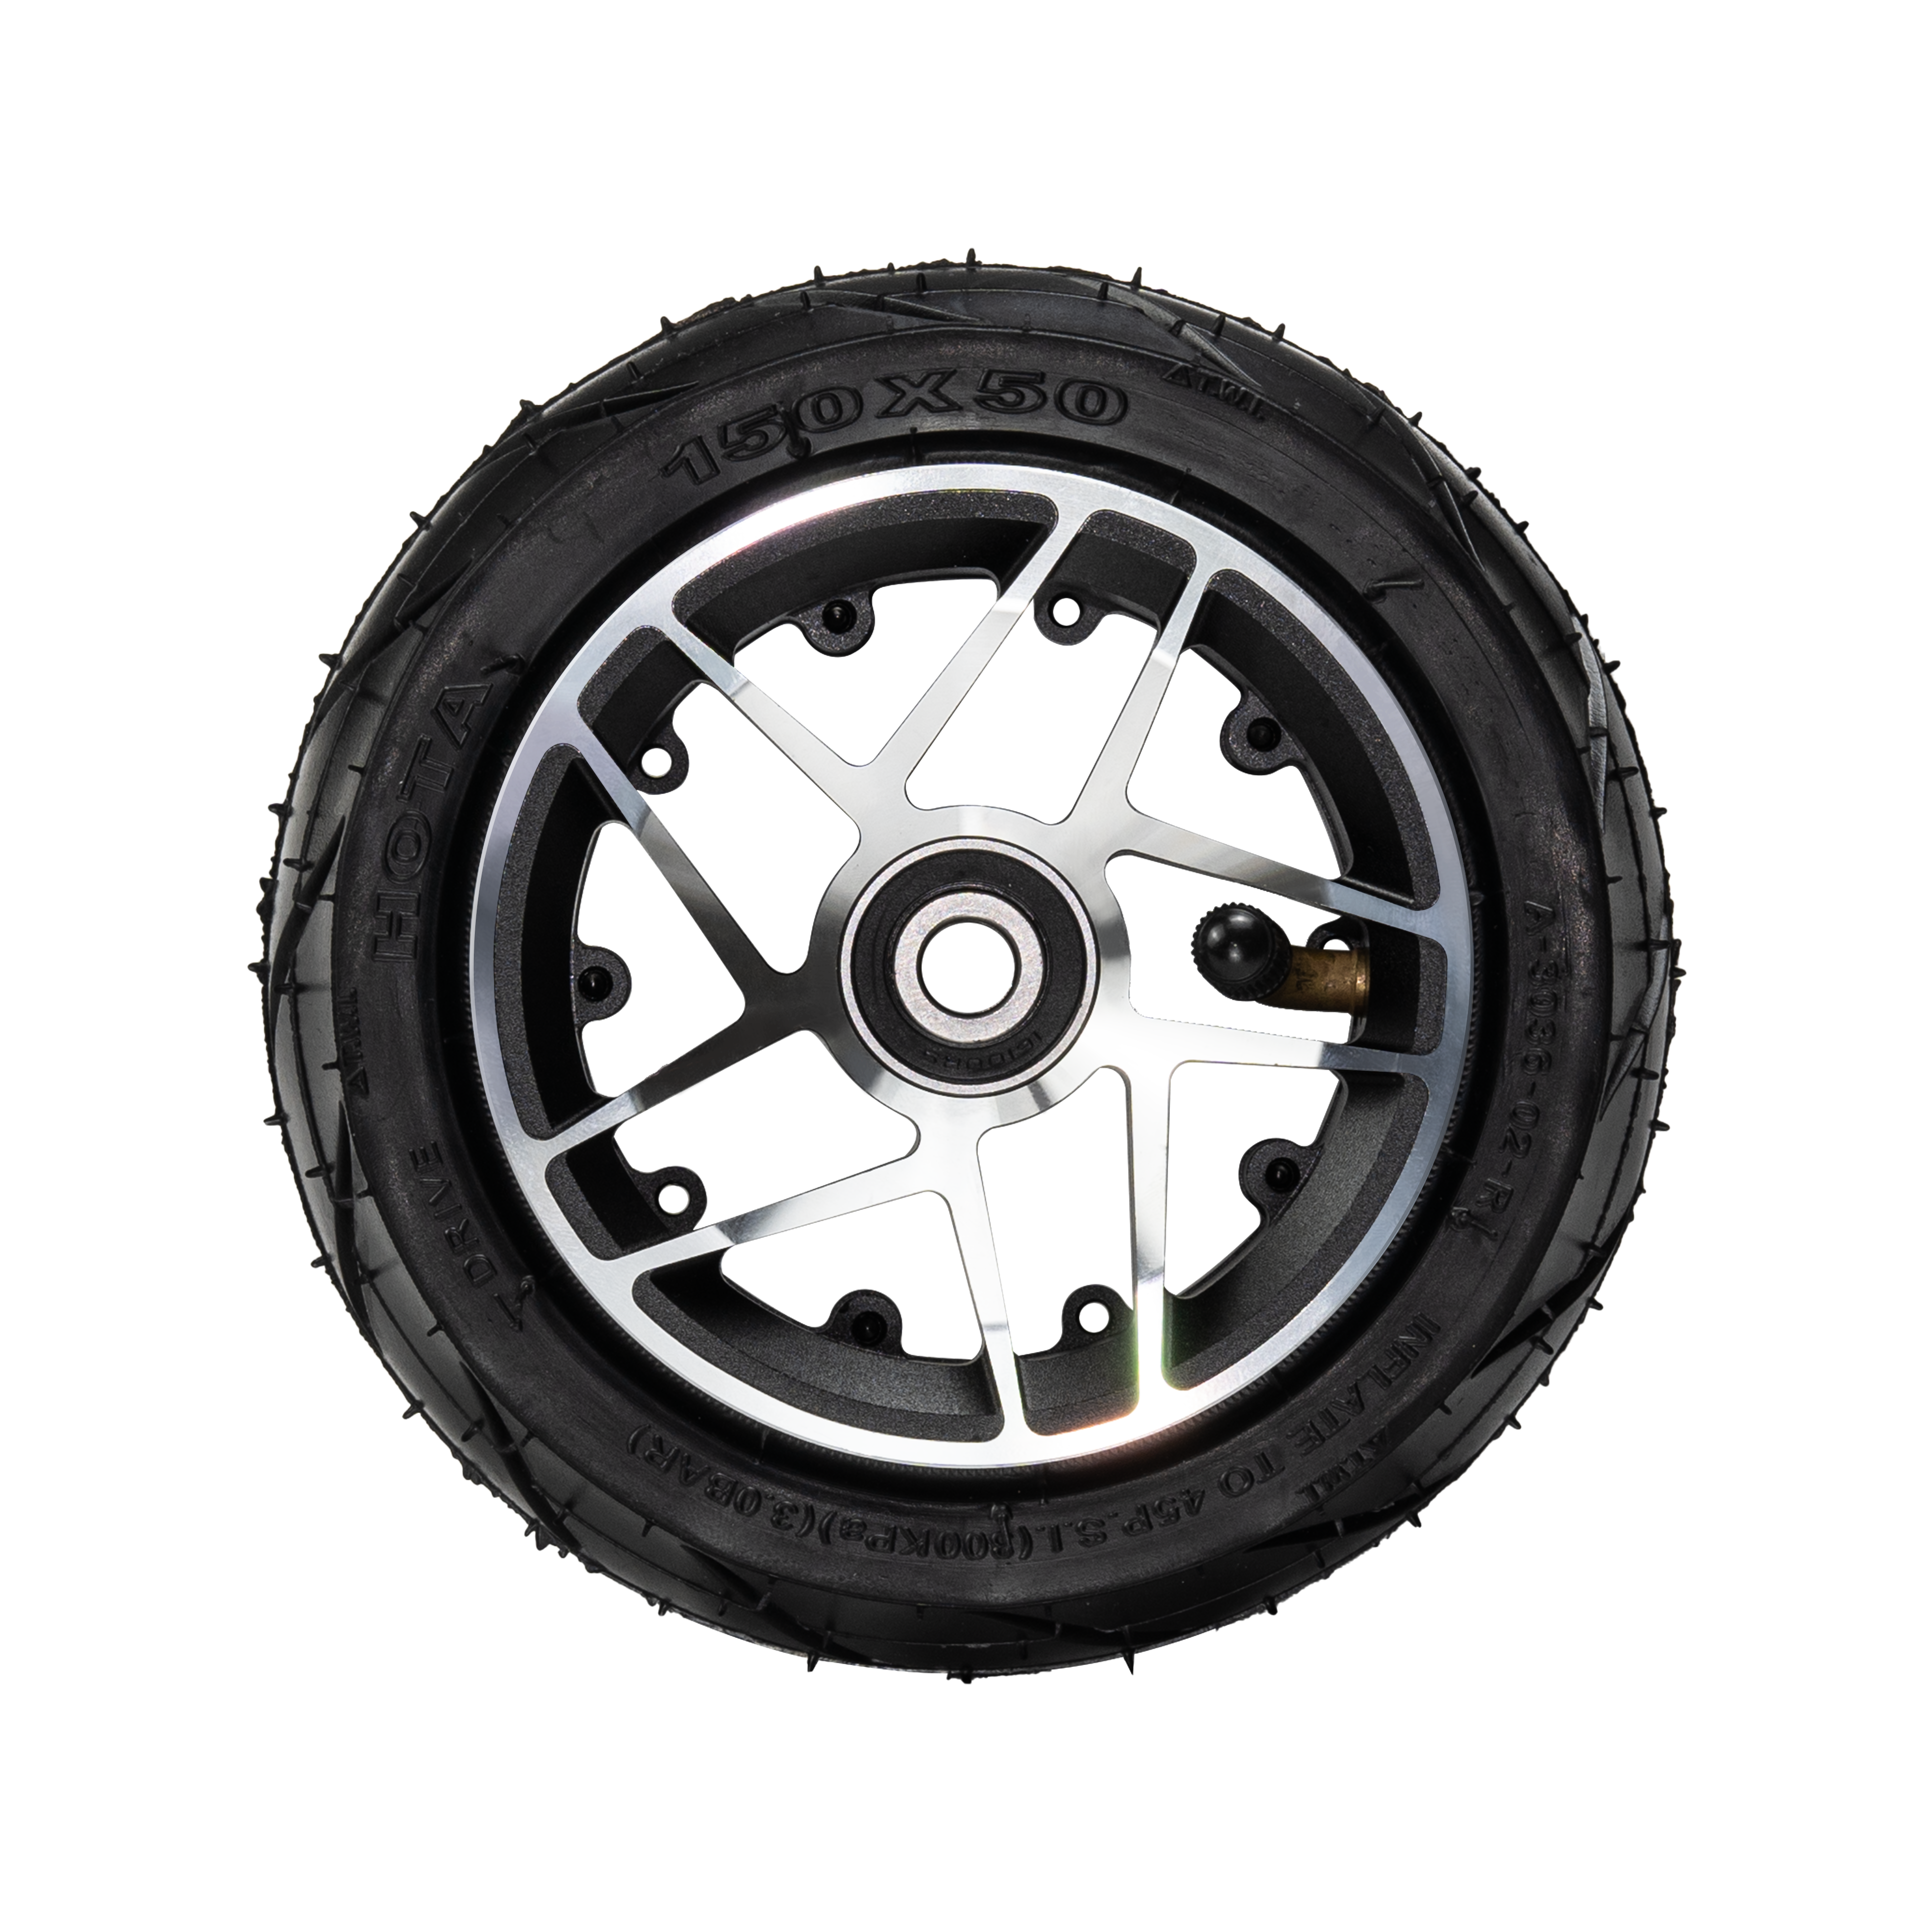 Acedeck® All Terrain 150*50mm Wheel Hota Tire- Nomad N1 2in1 verison